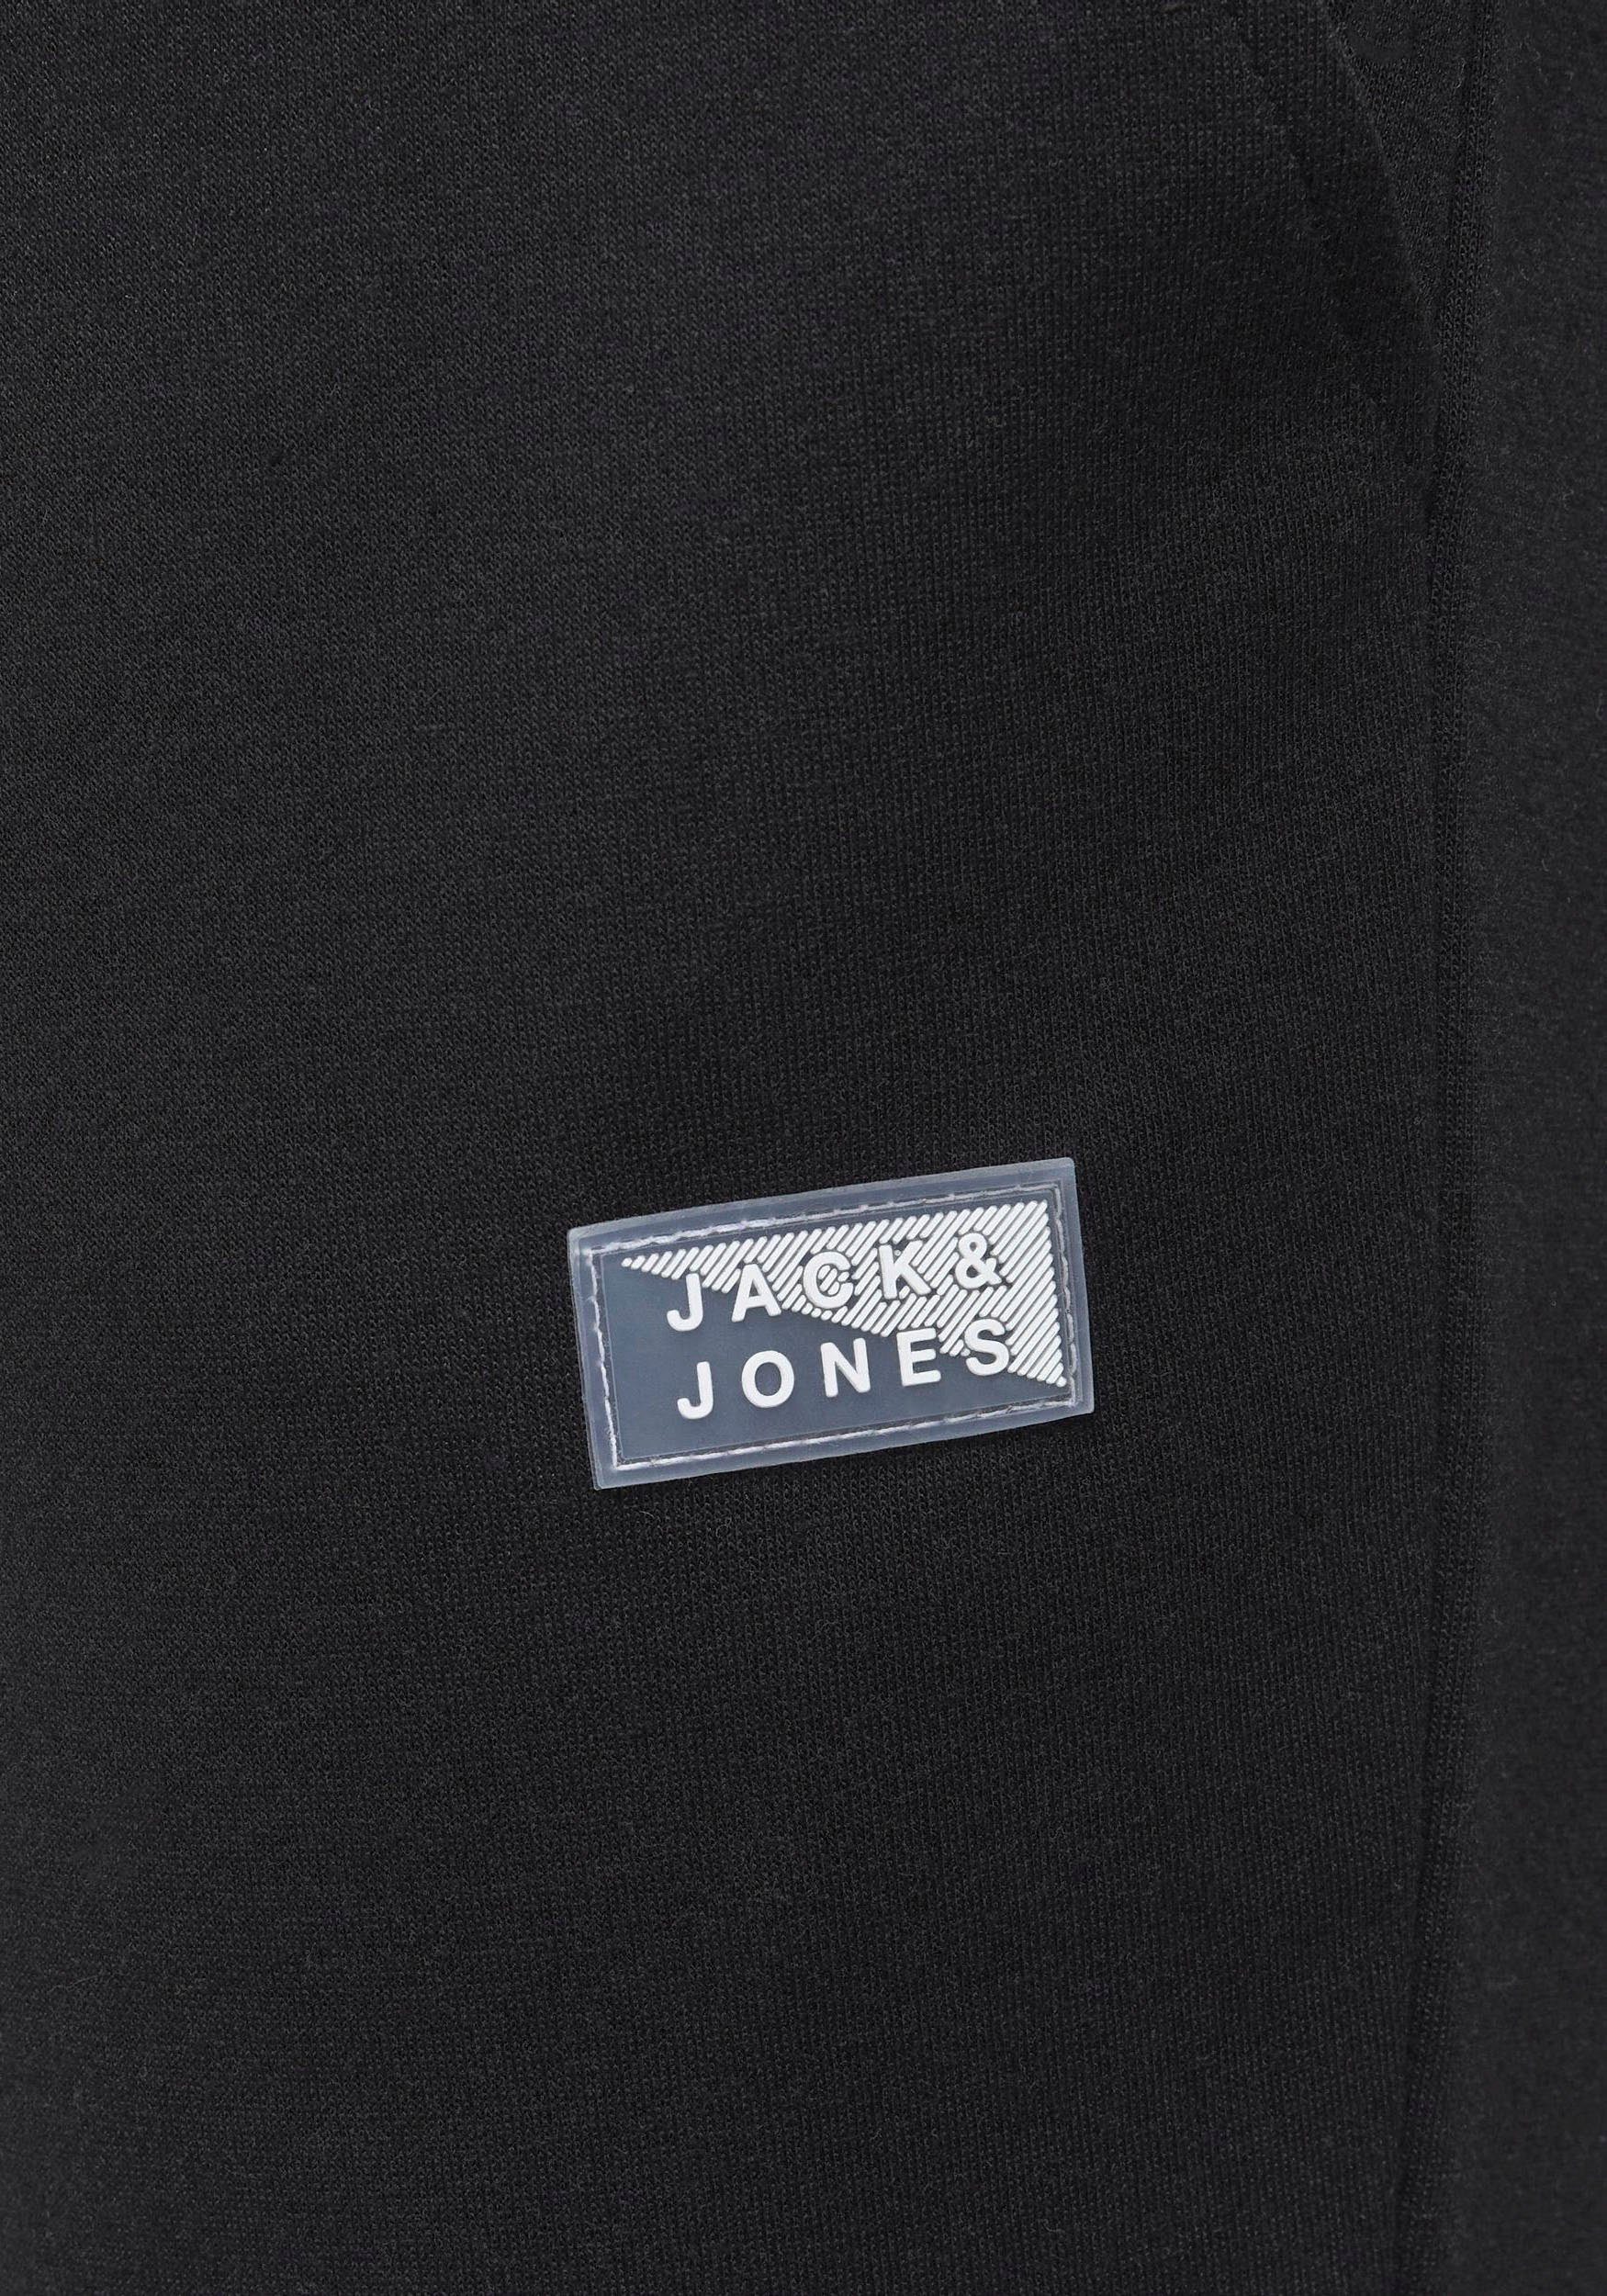 AIR Jones SWEAT PANTS Sweatpants schwarz & Jack